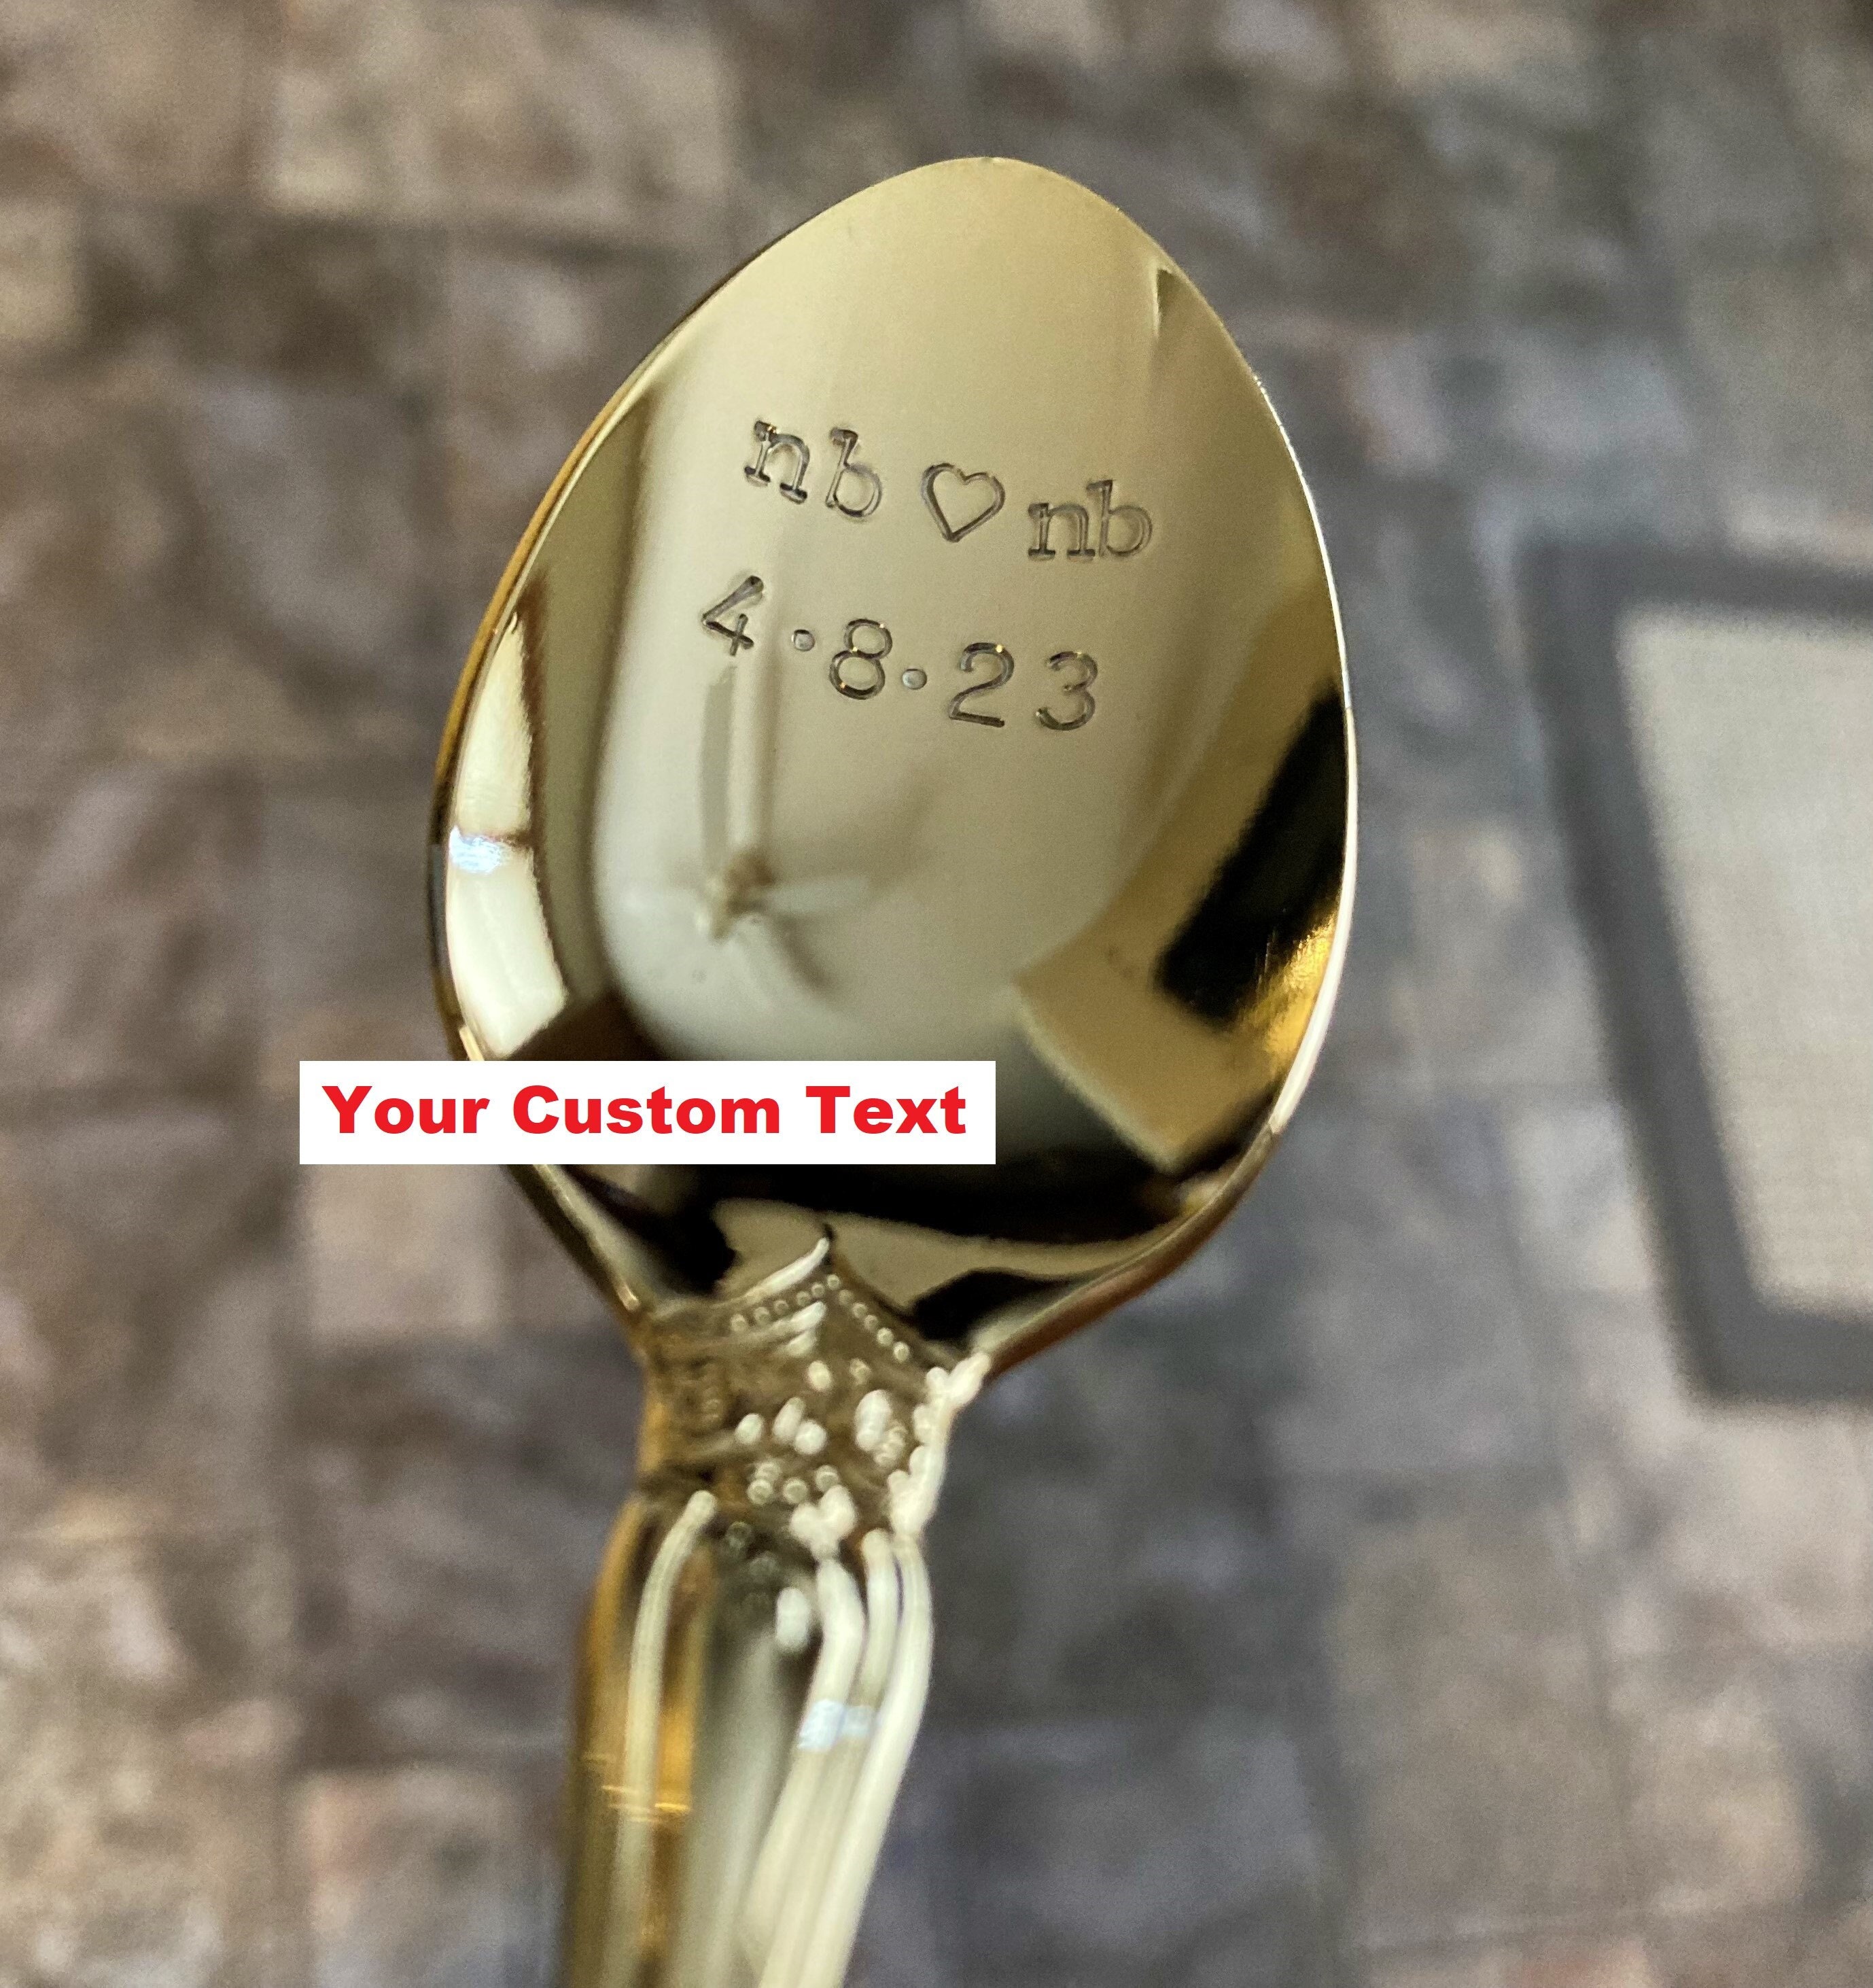 Rebel Arrowhead, 3/5oz Gold (Gold Plated) fishing spoon #15143